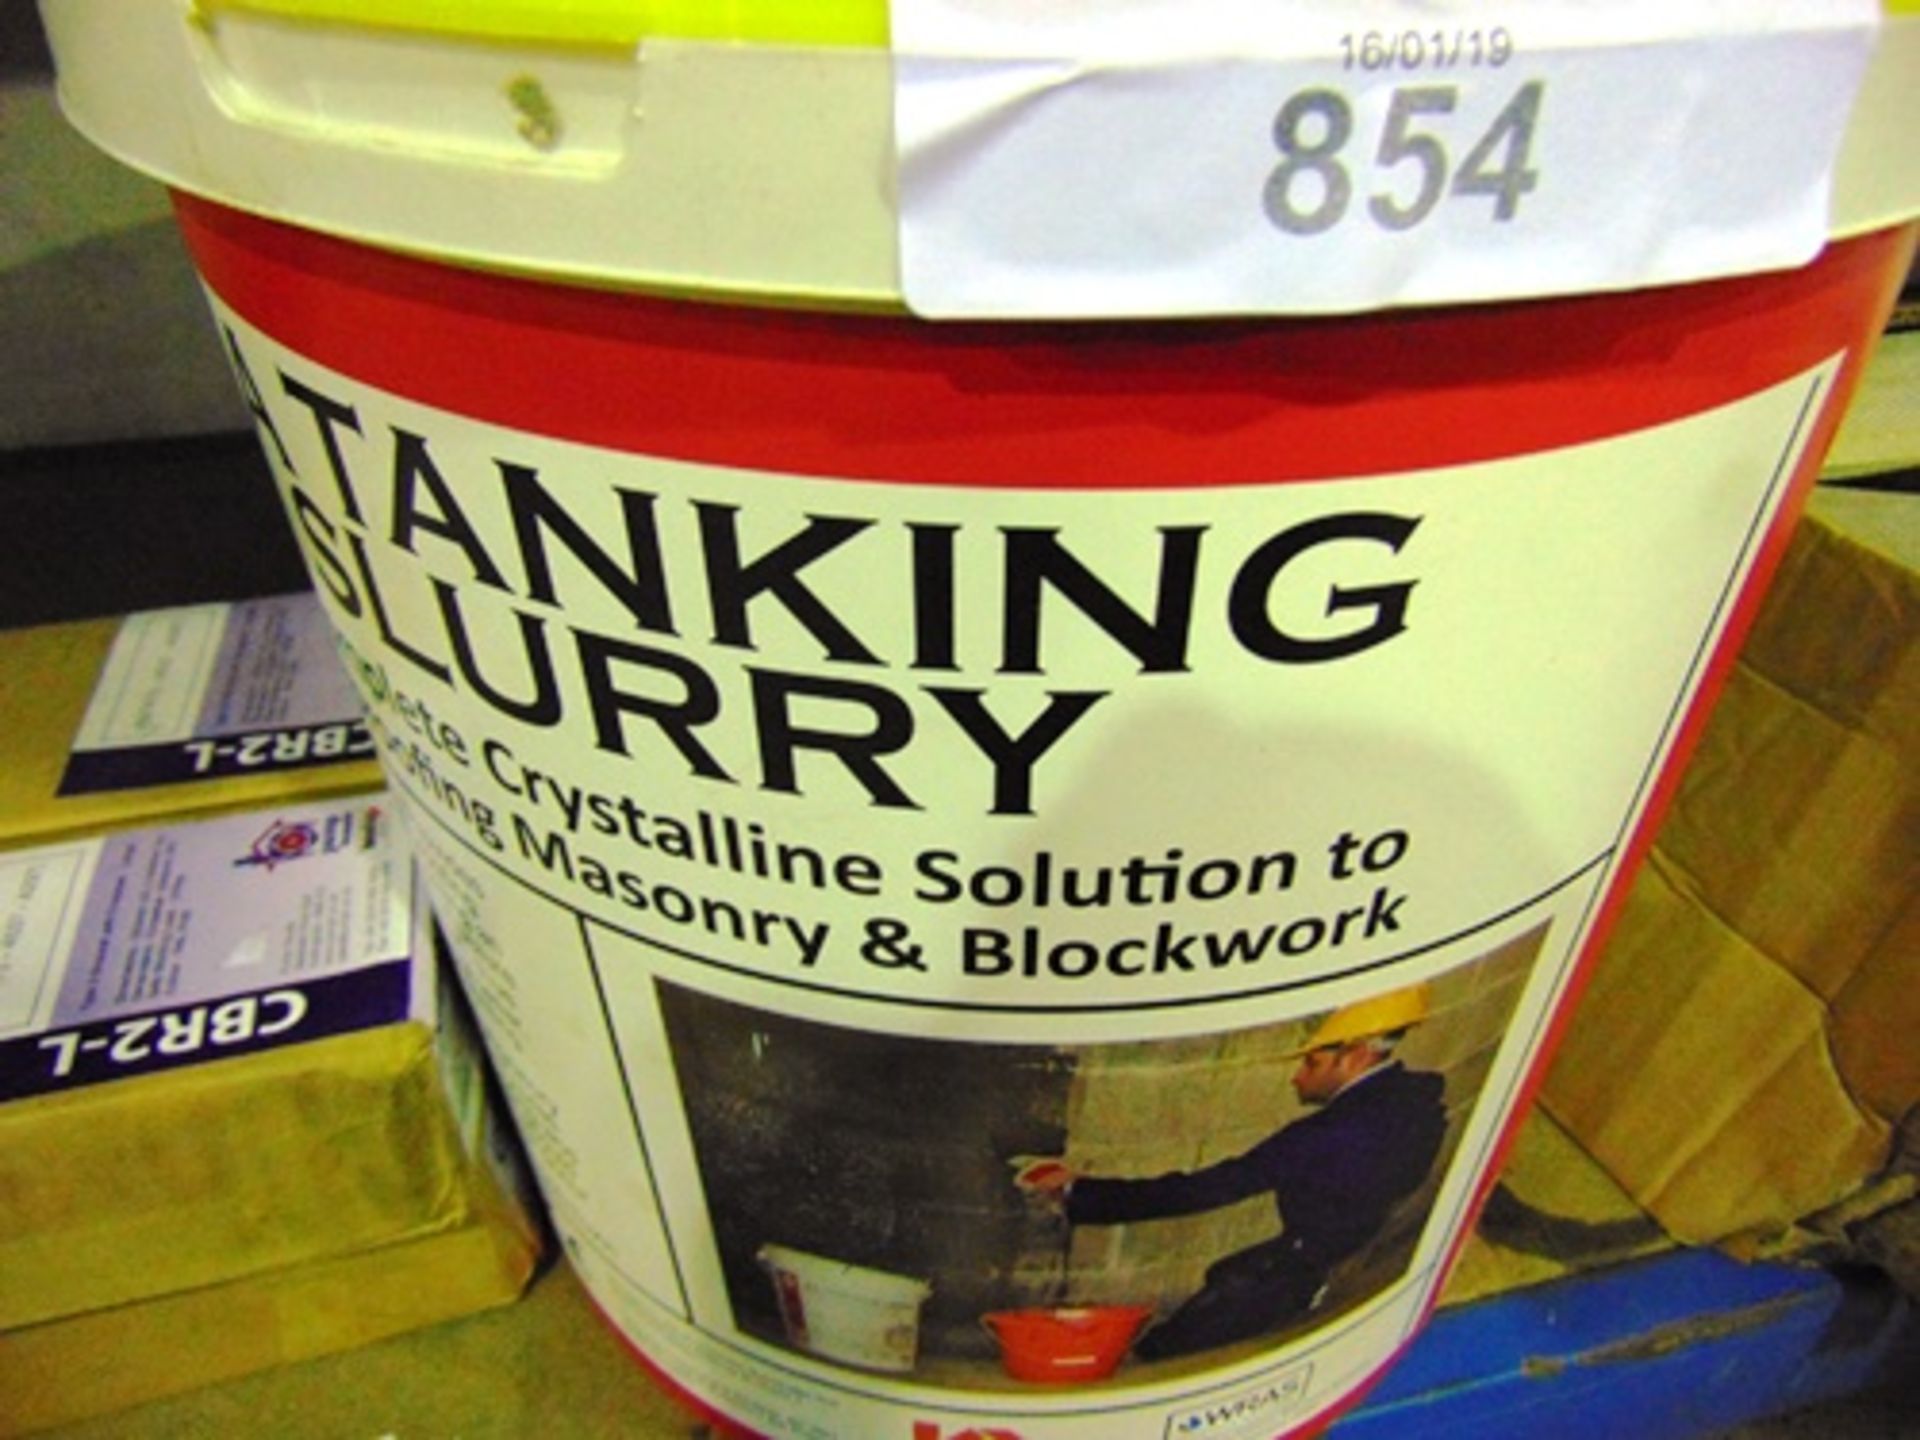 A 25kg tub of ka tanking slurry crystalline solution - New (GS4)